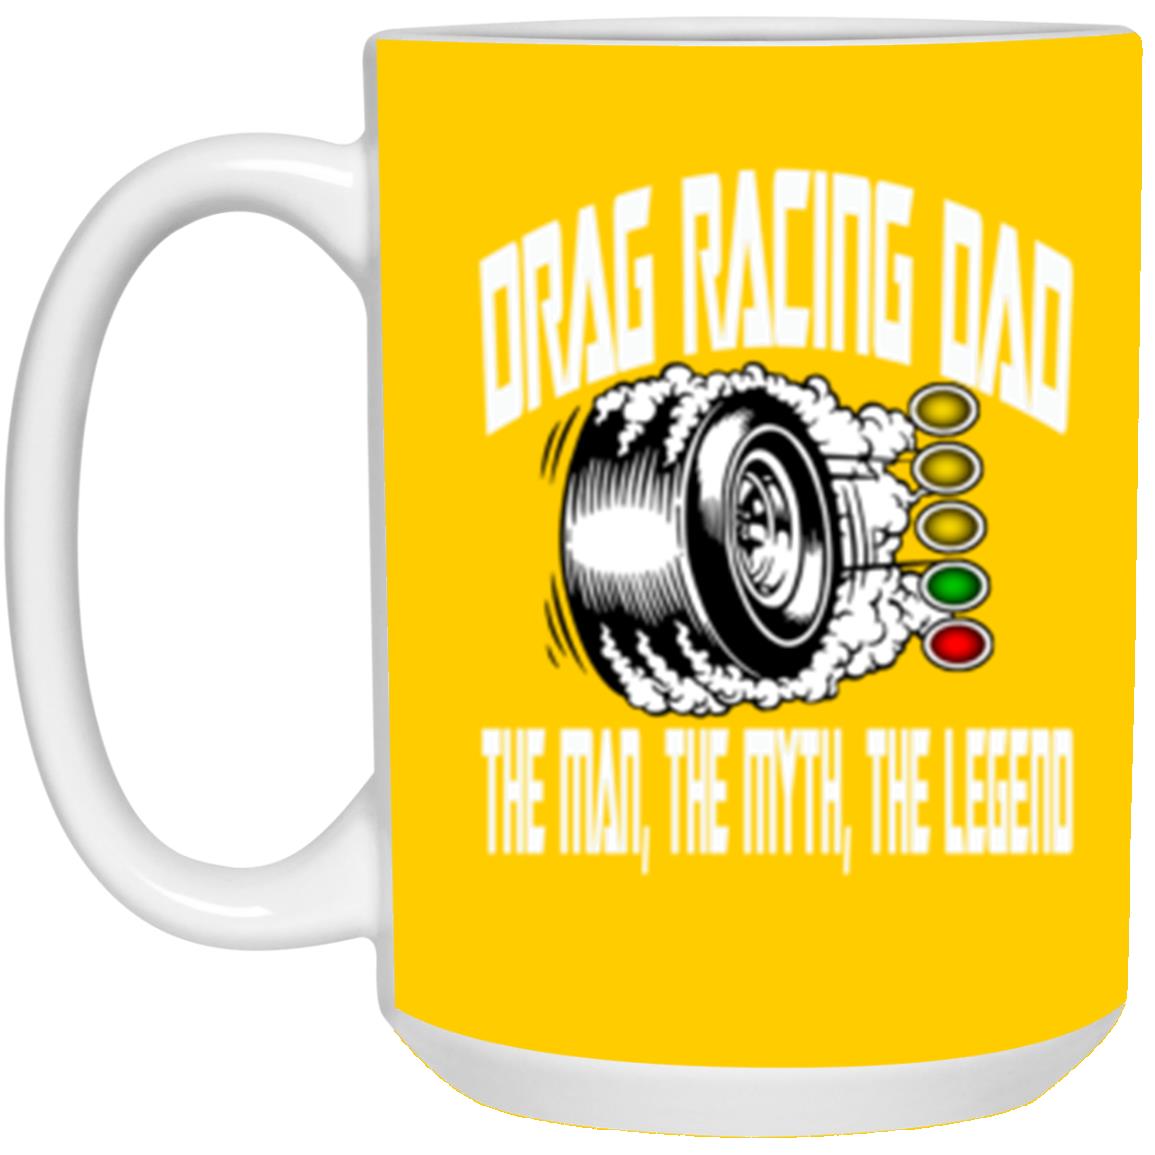 Drag Racing Dad 15 oz. White Mug